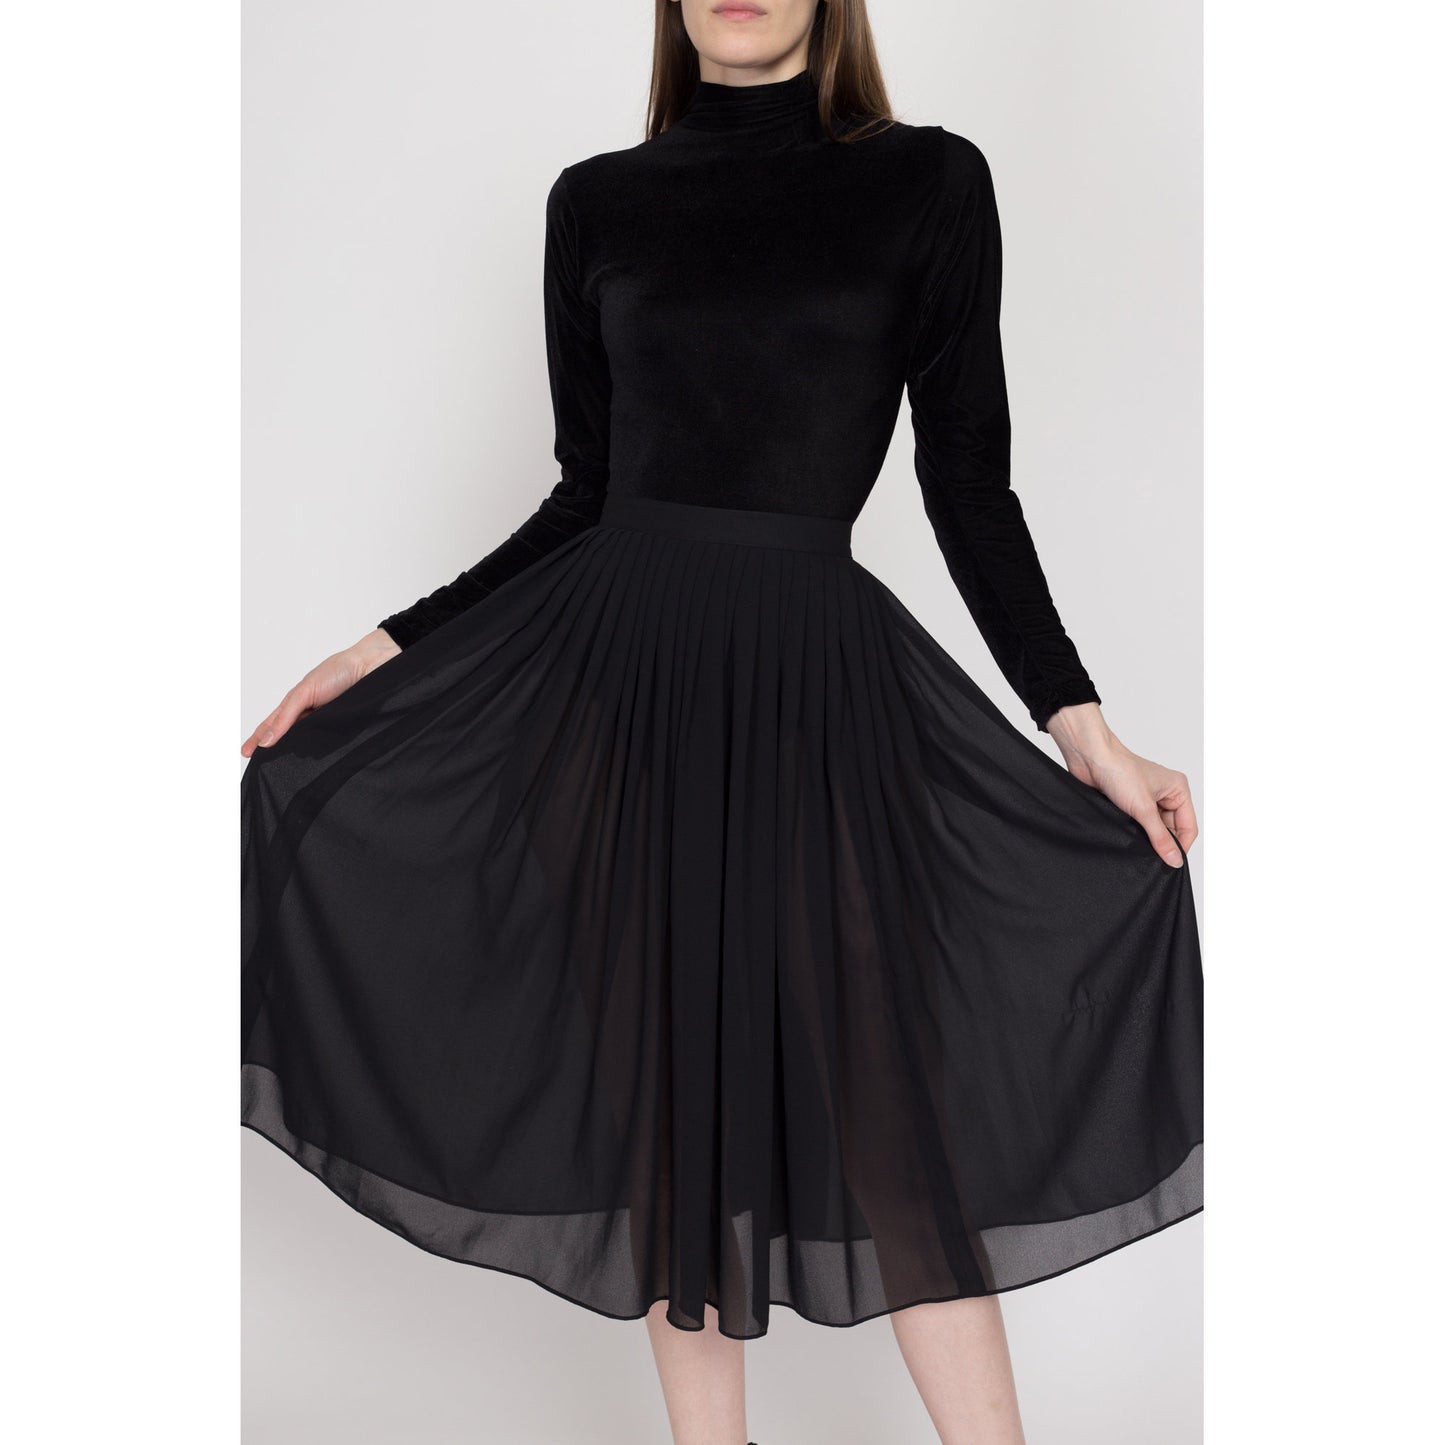 XS-Sm 80s Sheer Black Pleated Midi Skirt | Vintage High Waisted Minimalist Gothic Flowy Skirt